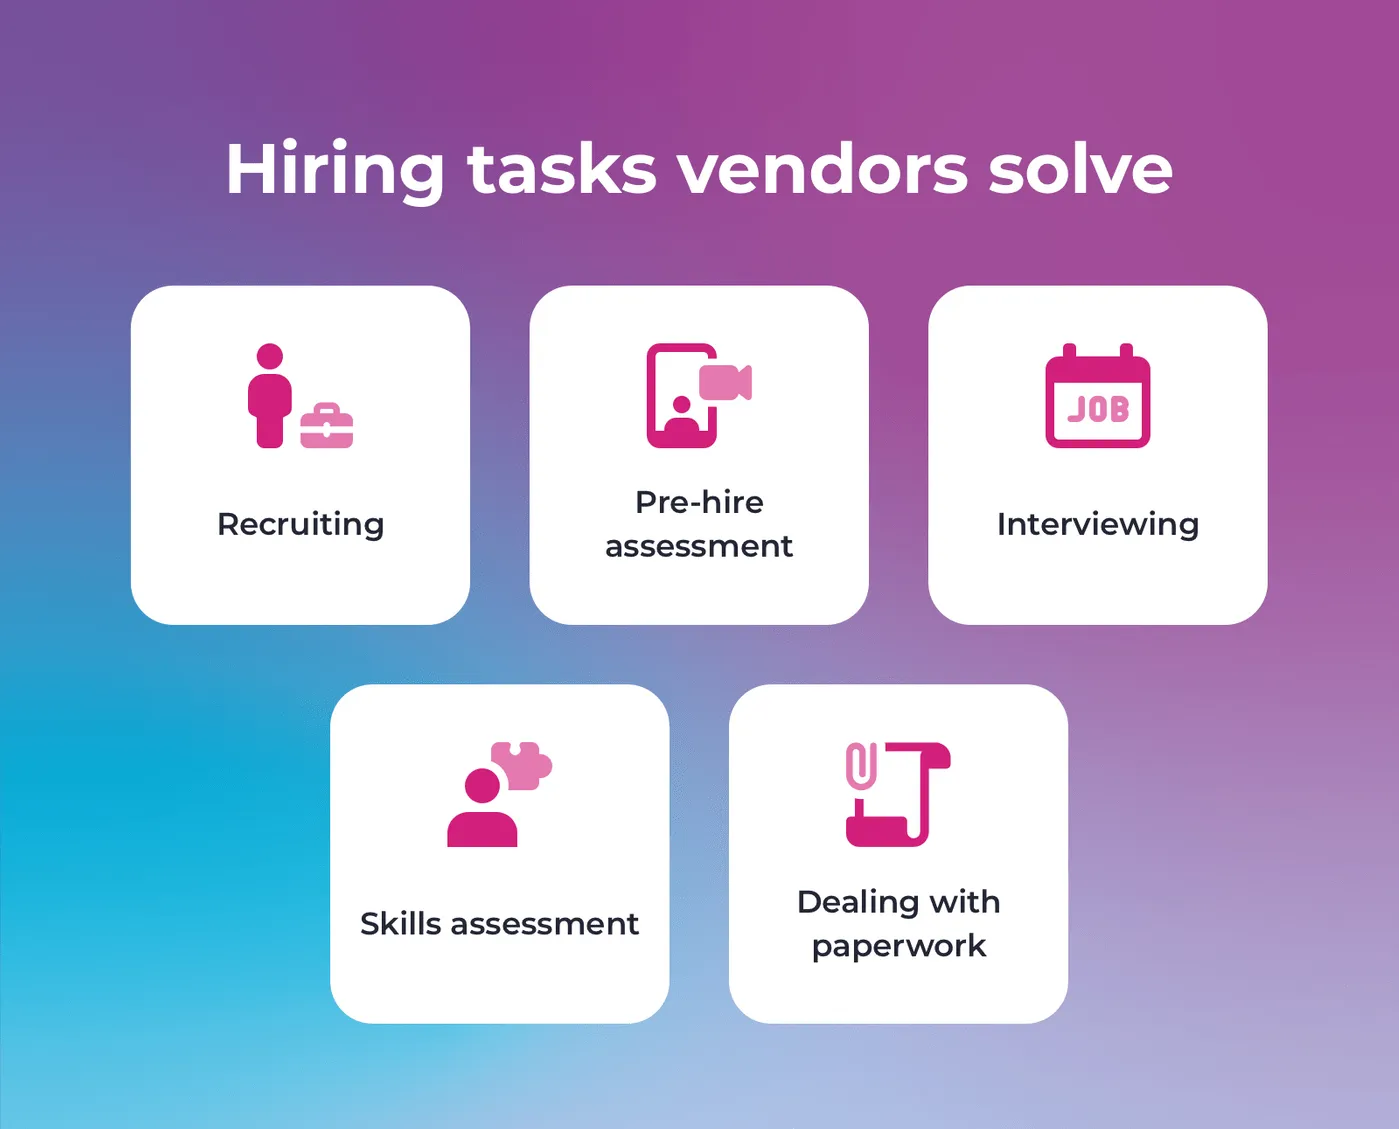 Dedicated team model: hiring tasks solved by vendor